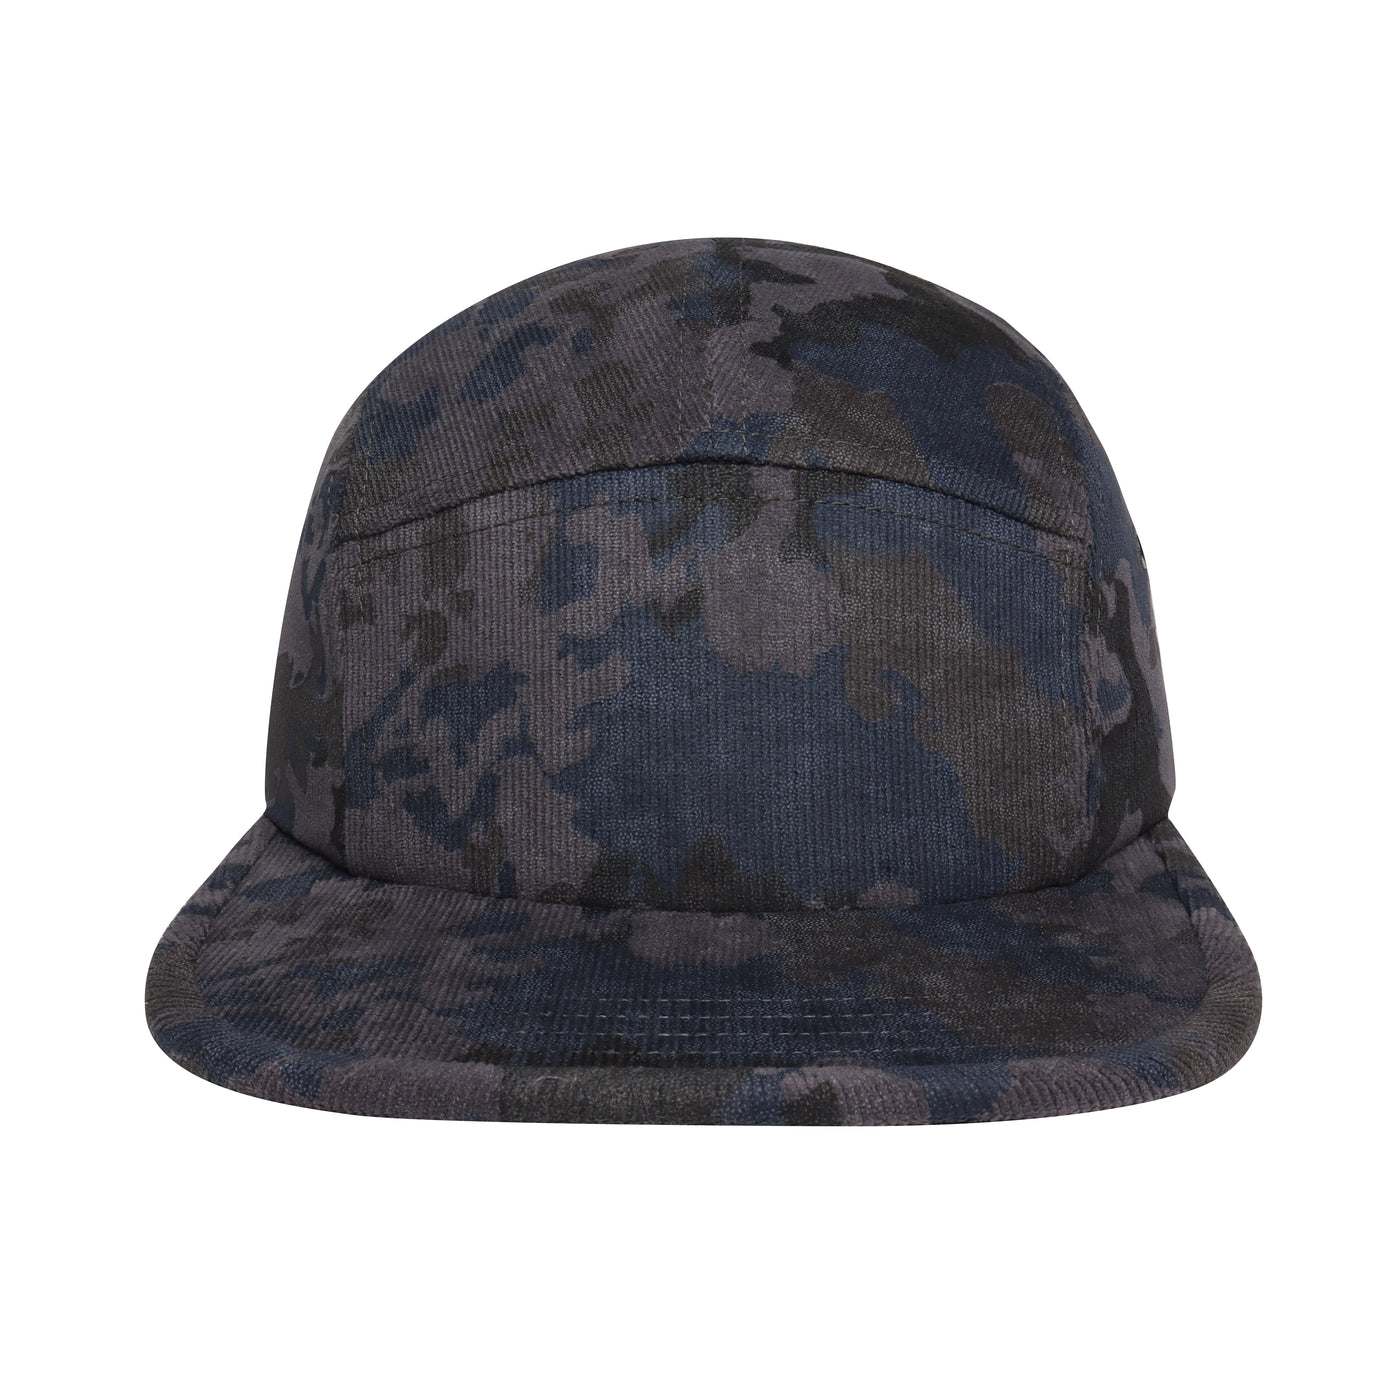 Hatphile Solid Tie Dye Corduroy 5 Panel Hat Camp Cap